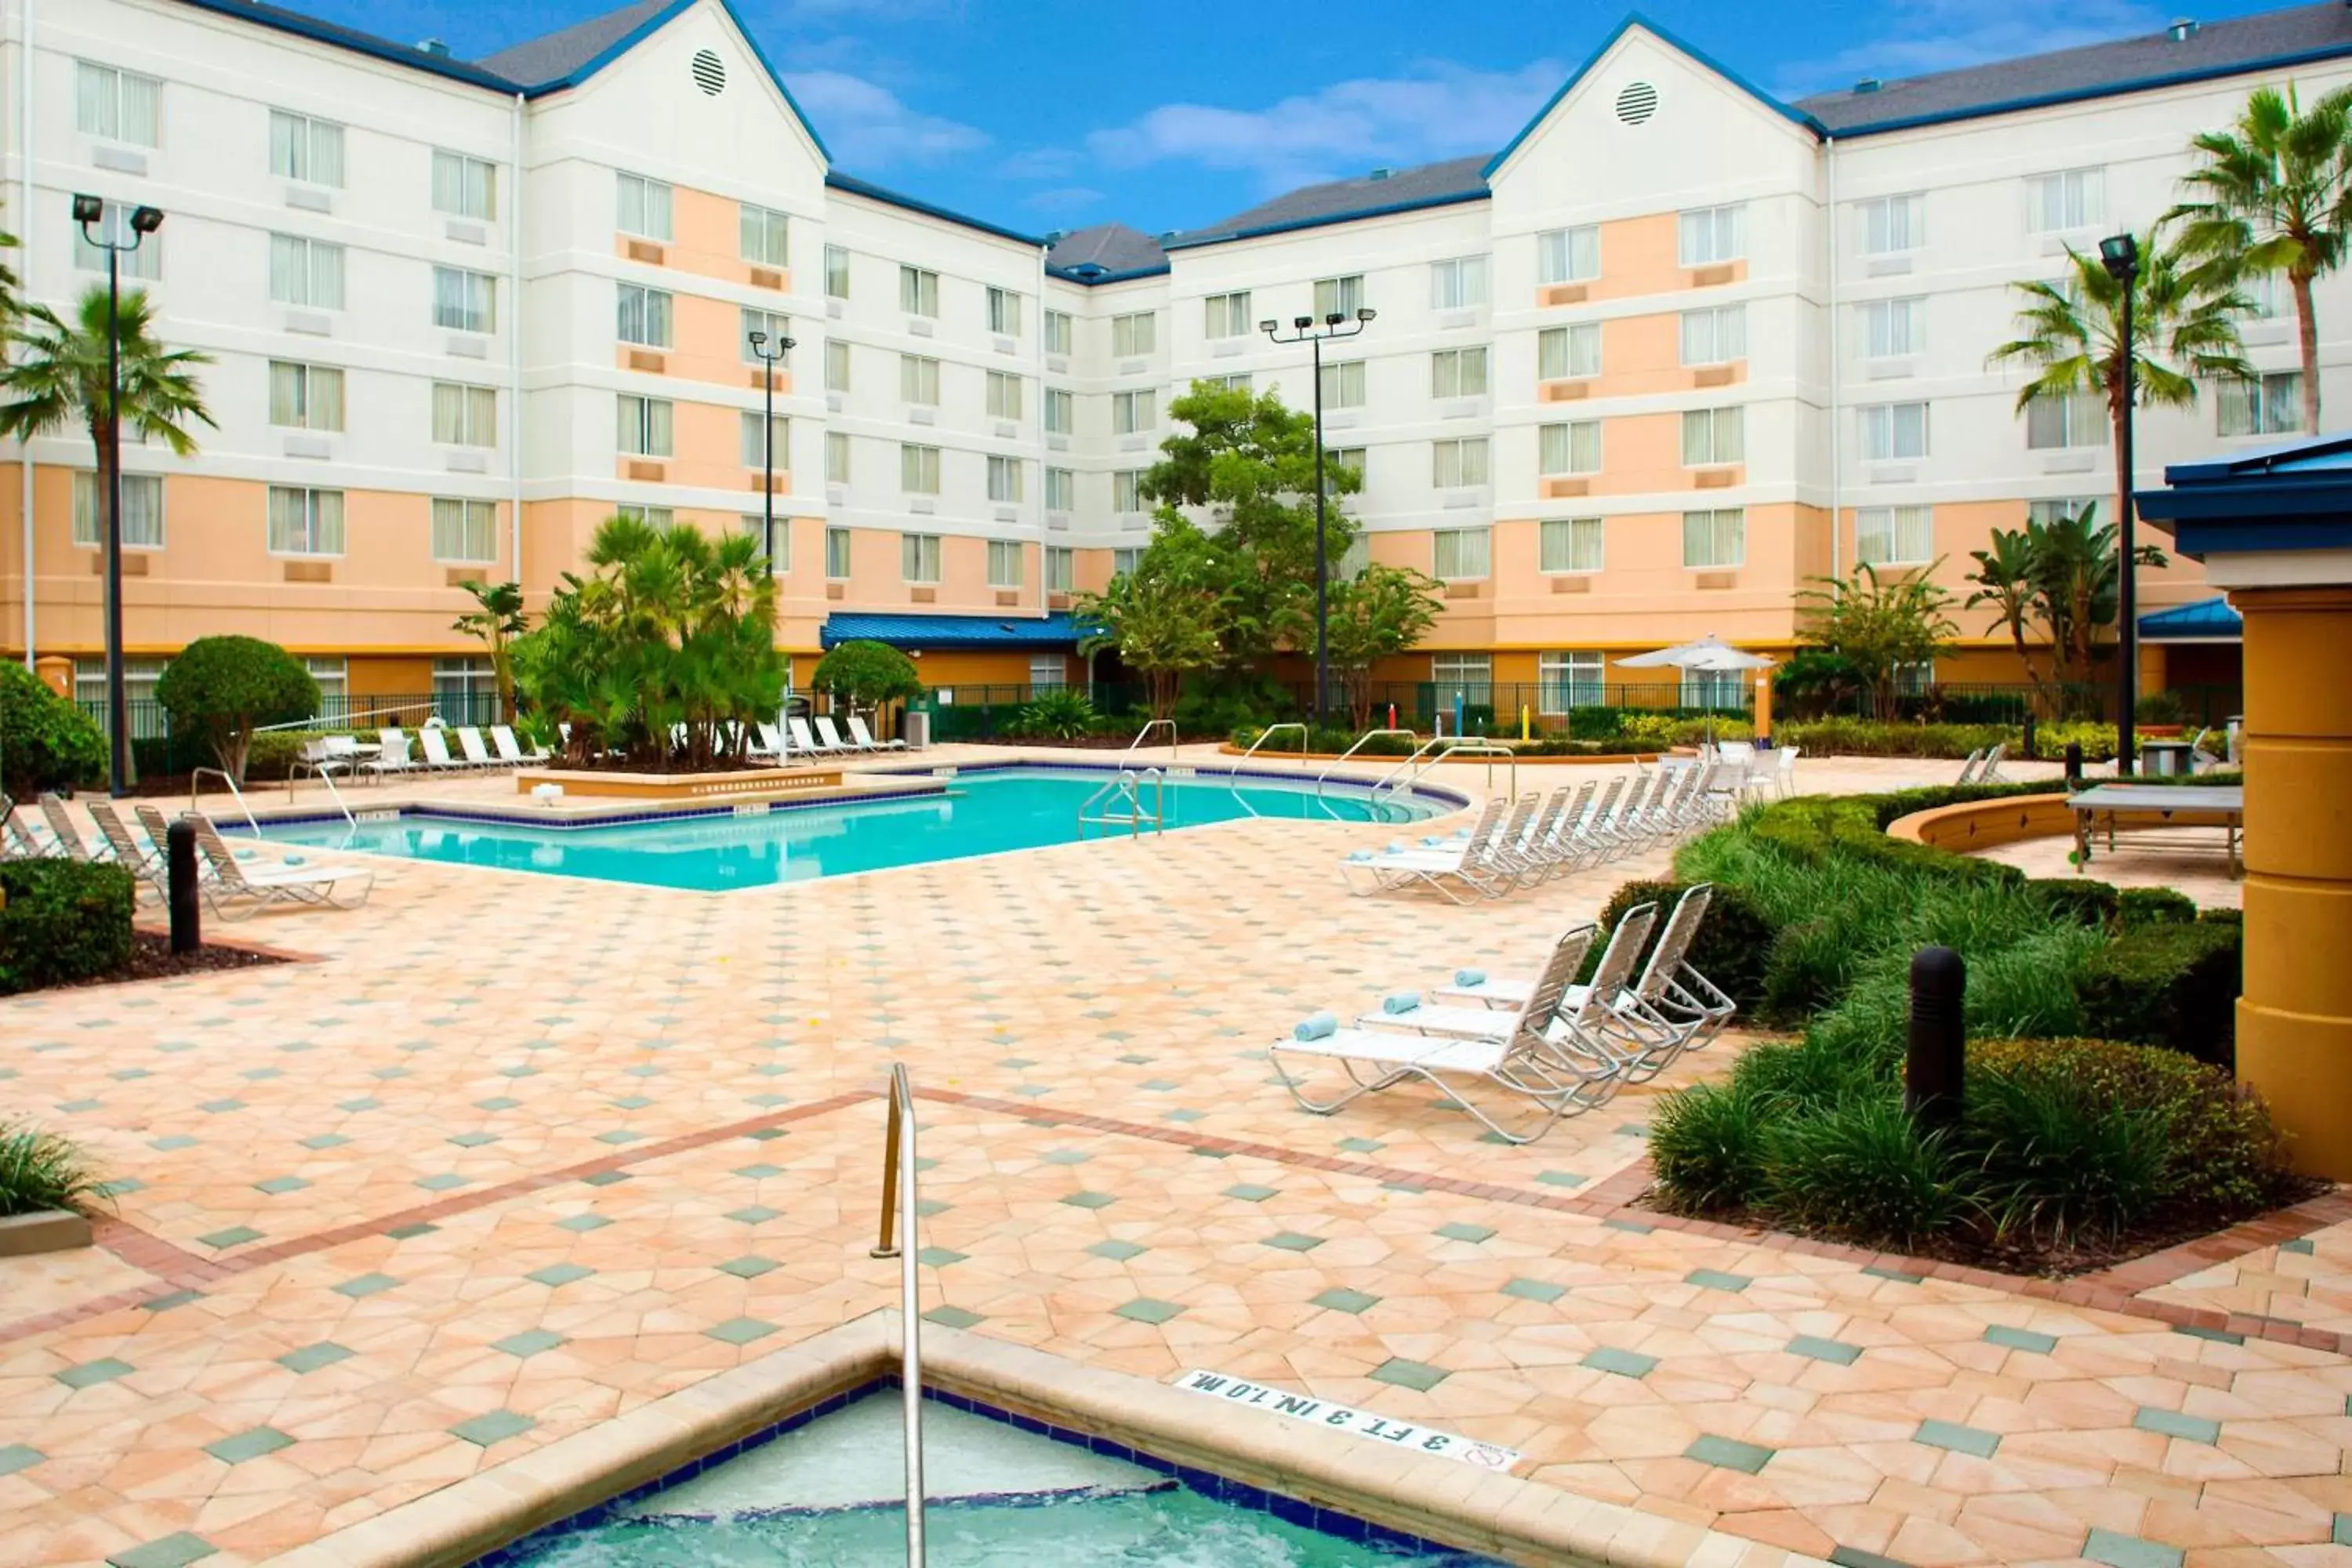 Swimming Pool in Fairfield Inn & Suites by Marriott Orlando Lake Buena Vista in the Marriott Village